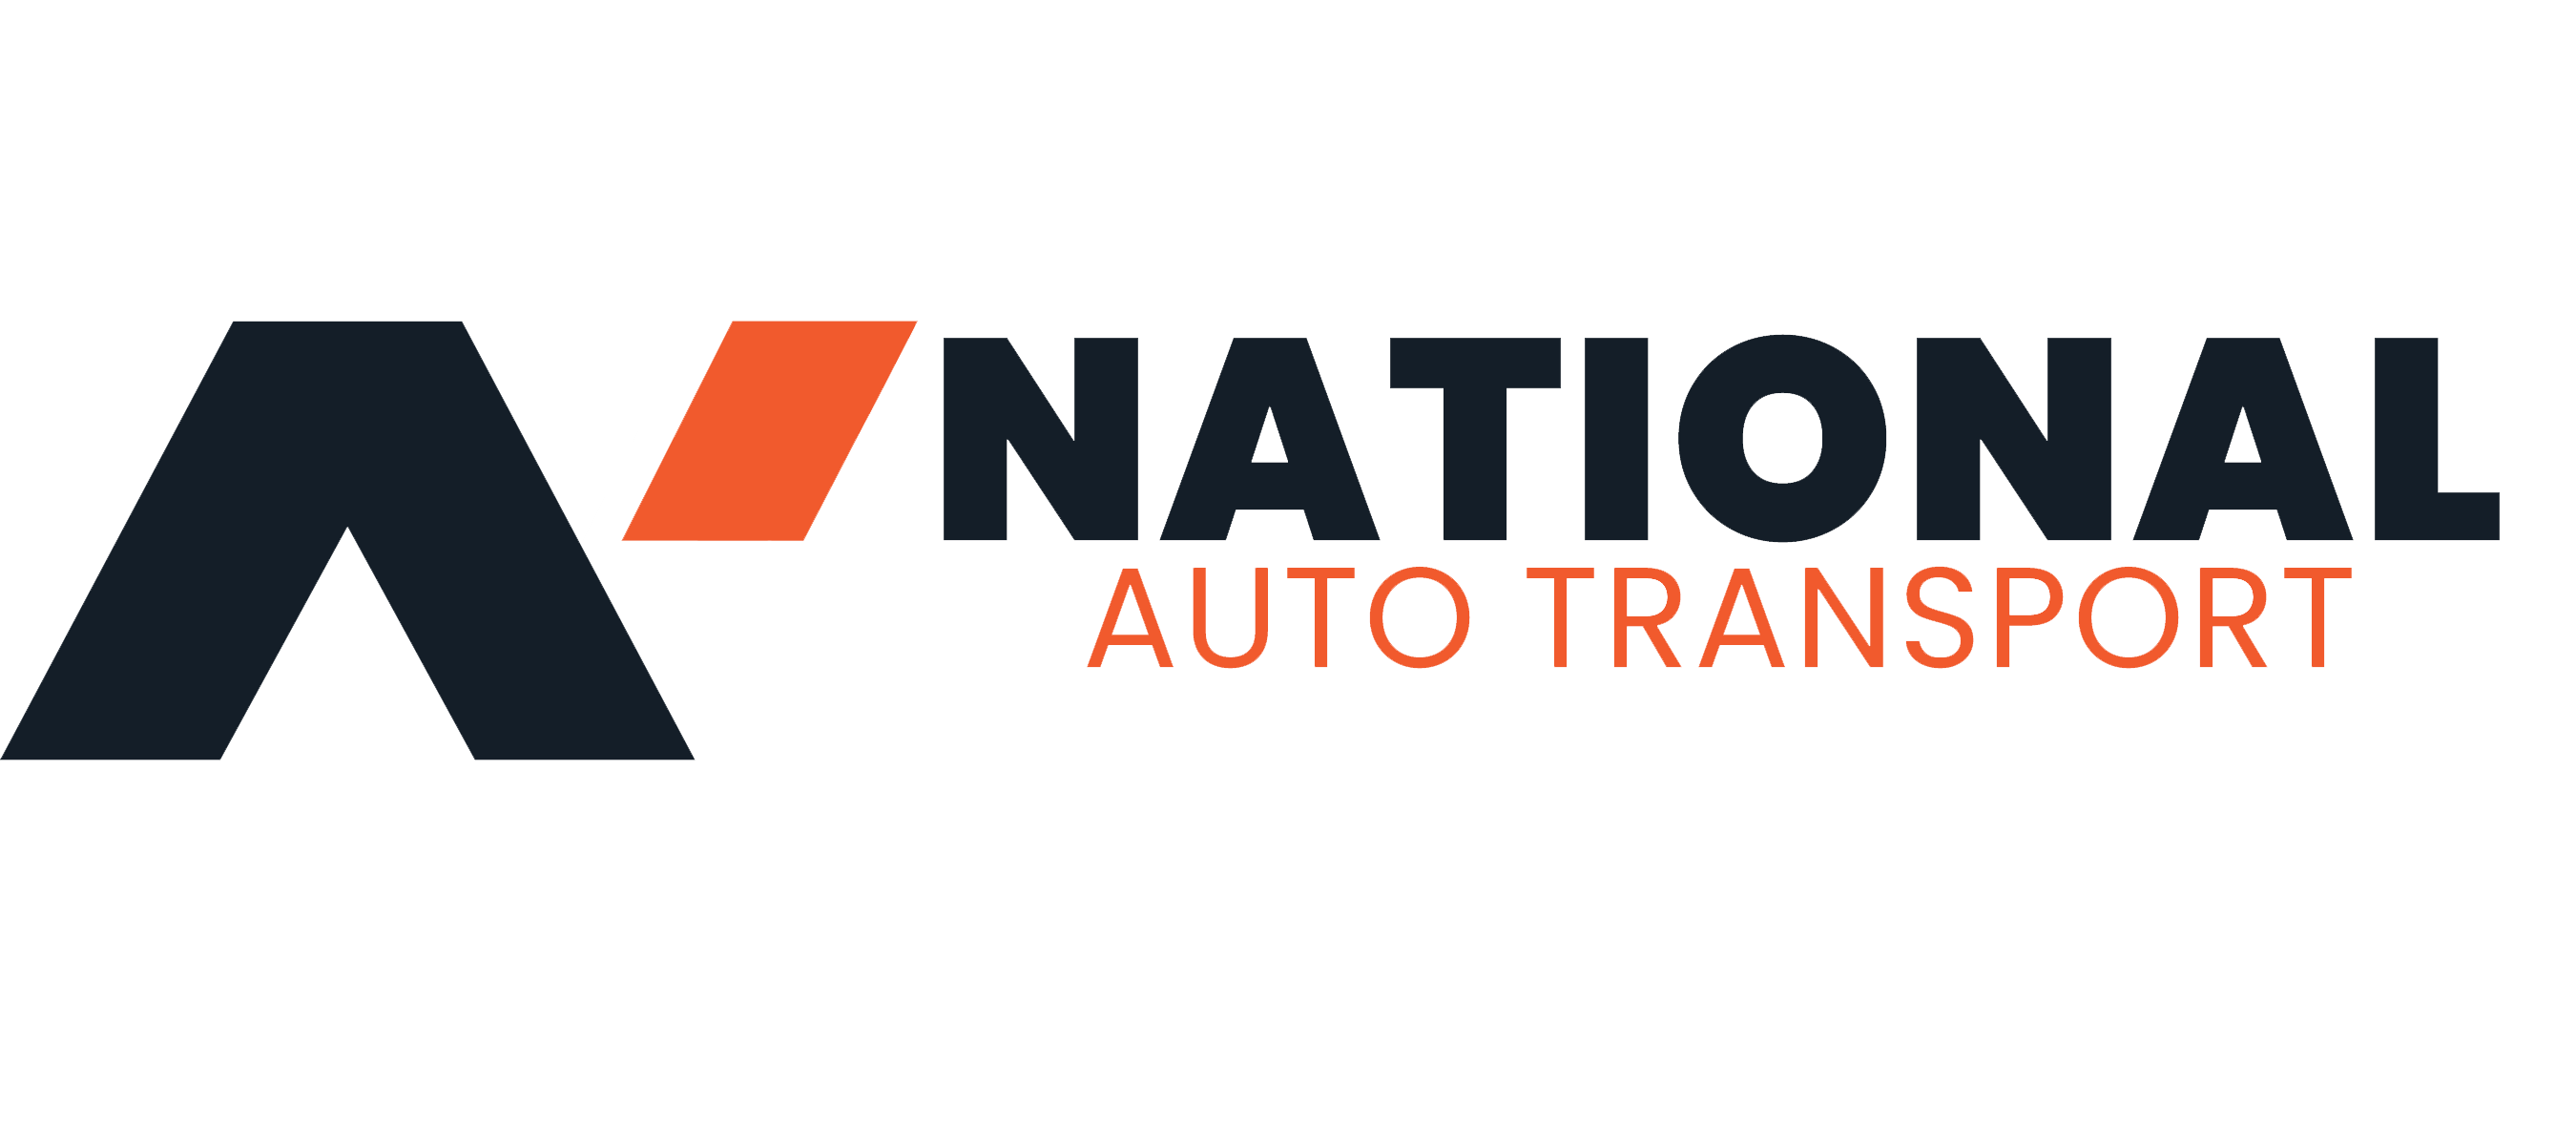 NATIONAL AUTO TRANSPORT LOGO